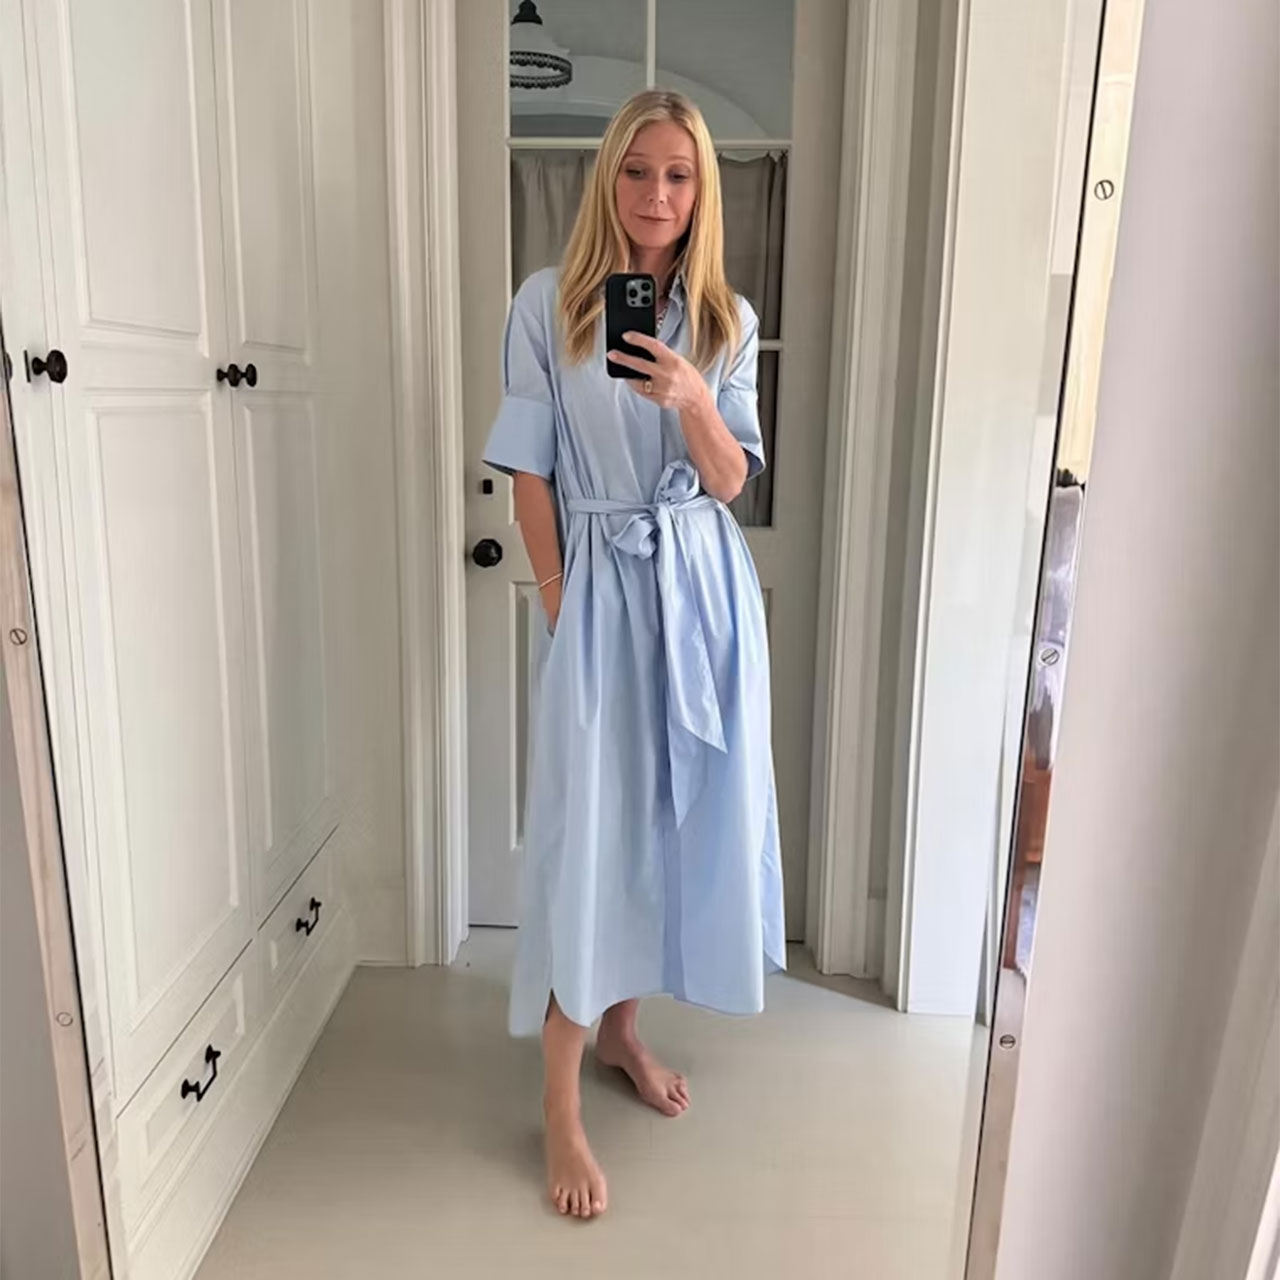 Gwyneth Paltrow blue shirt dress selfie Instagram